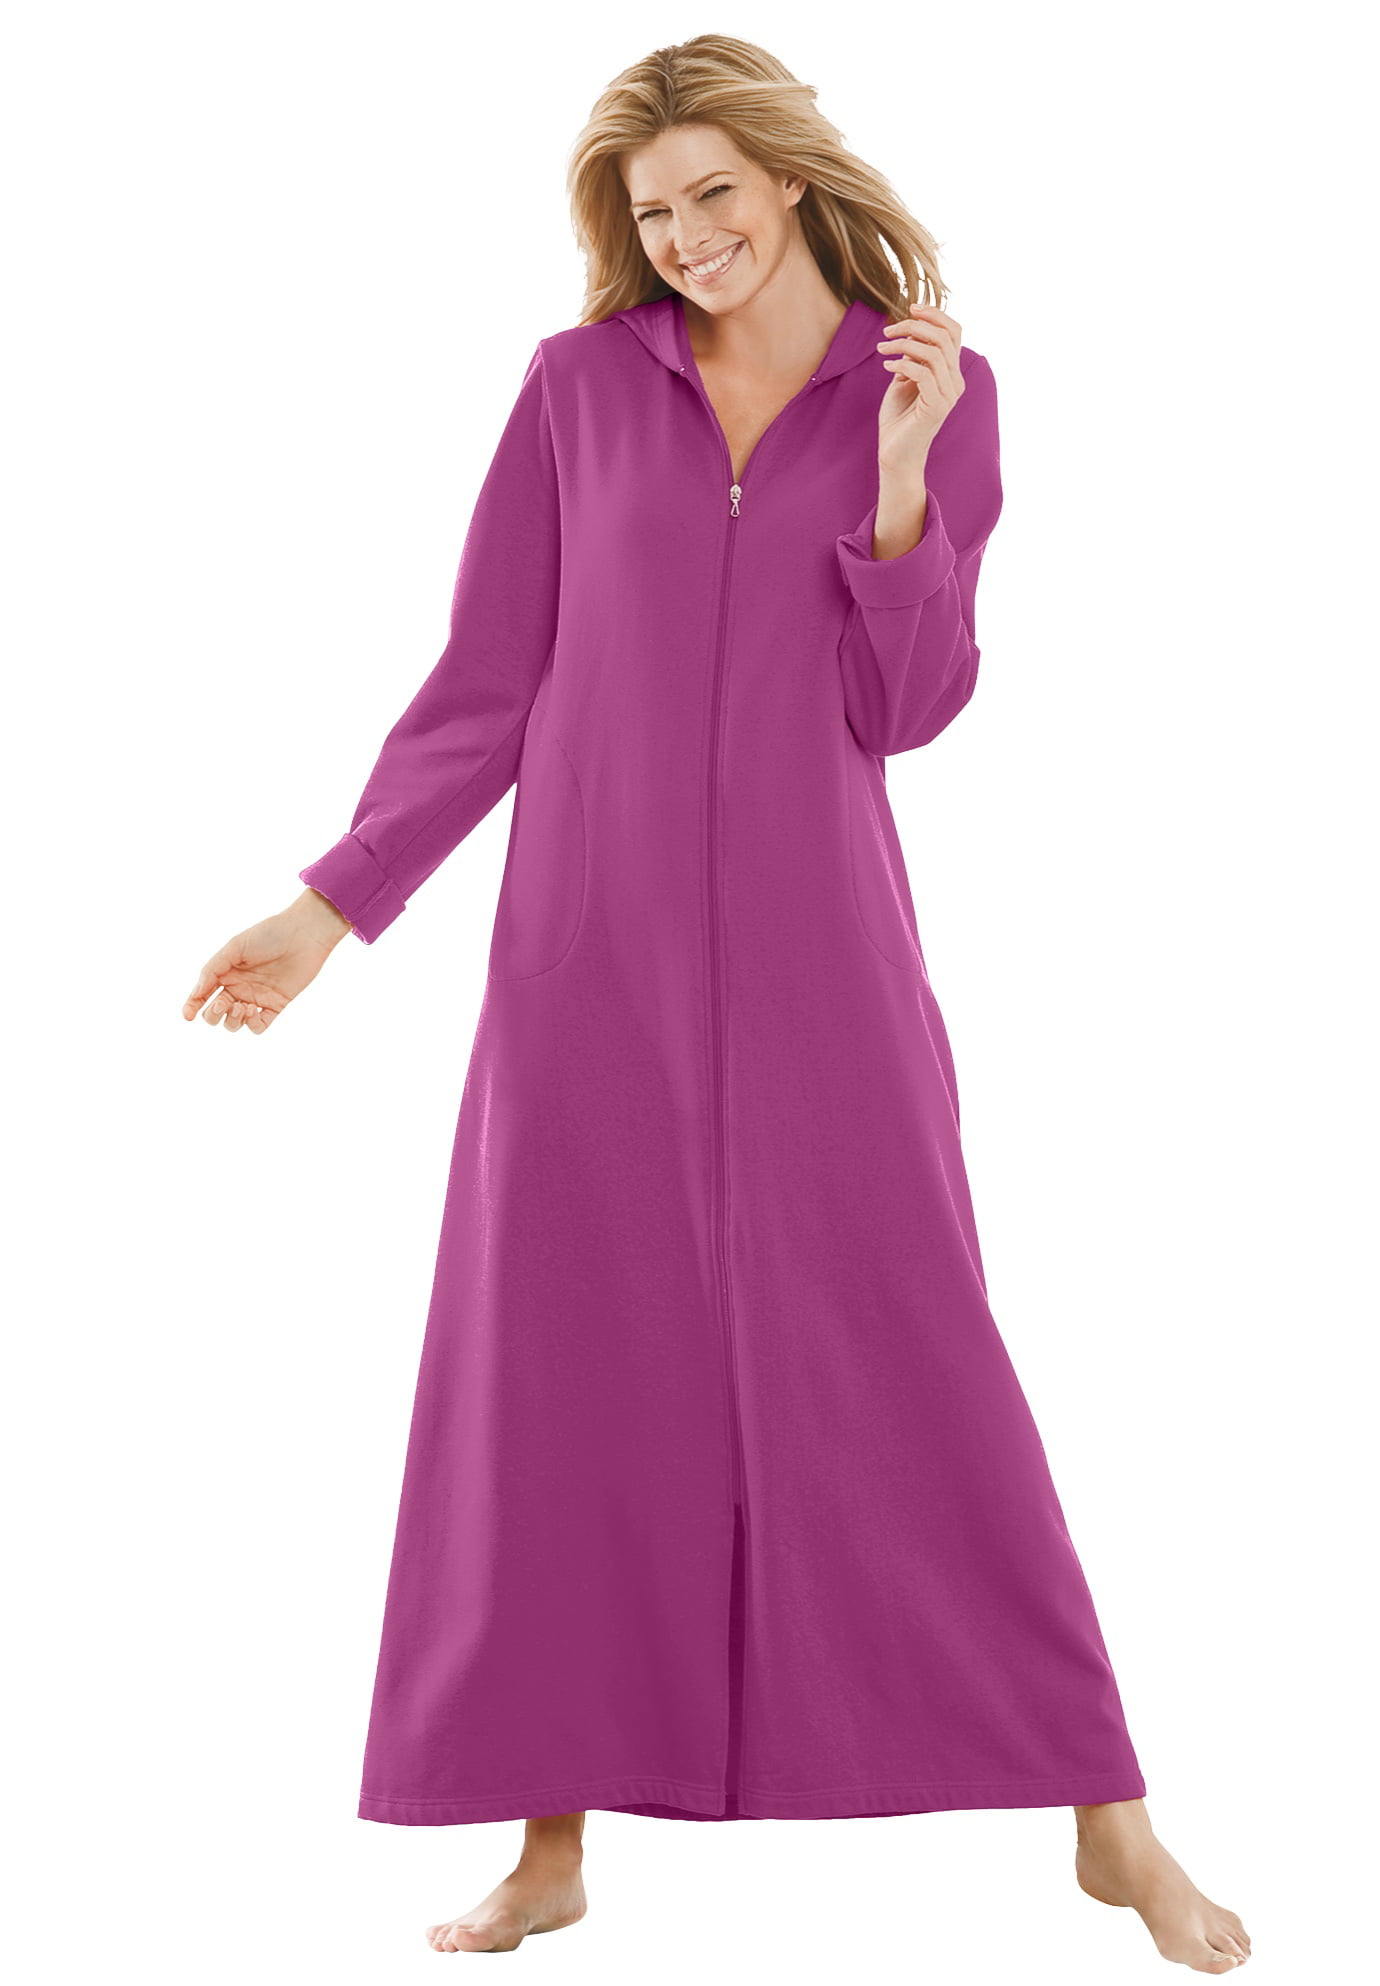 Dreams And Co Women S Plus Size Hooded Fleece Robe Robe